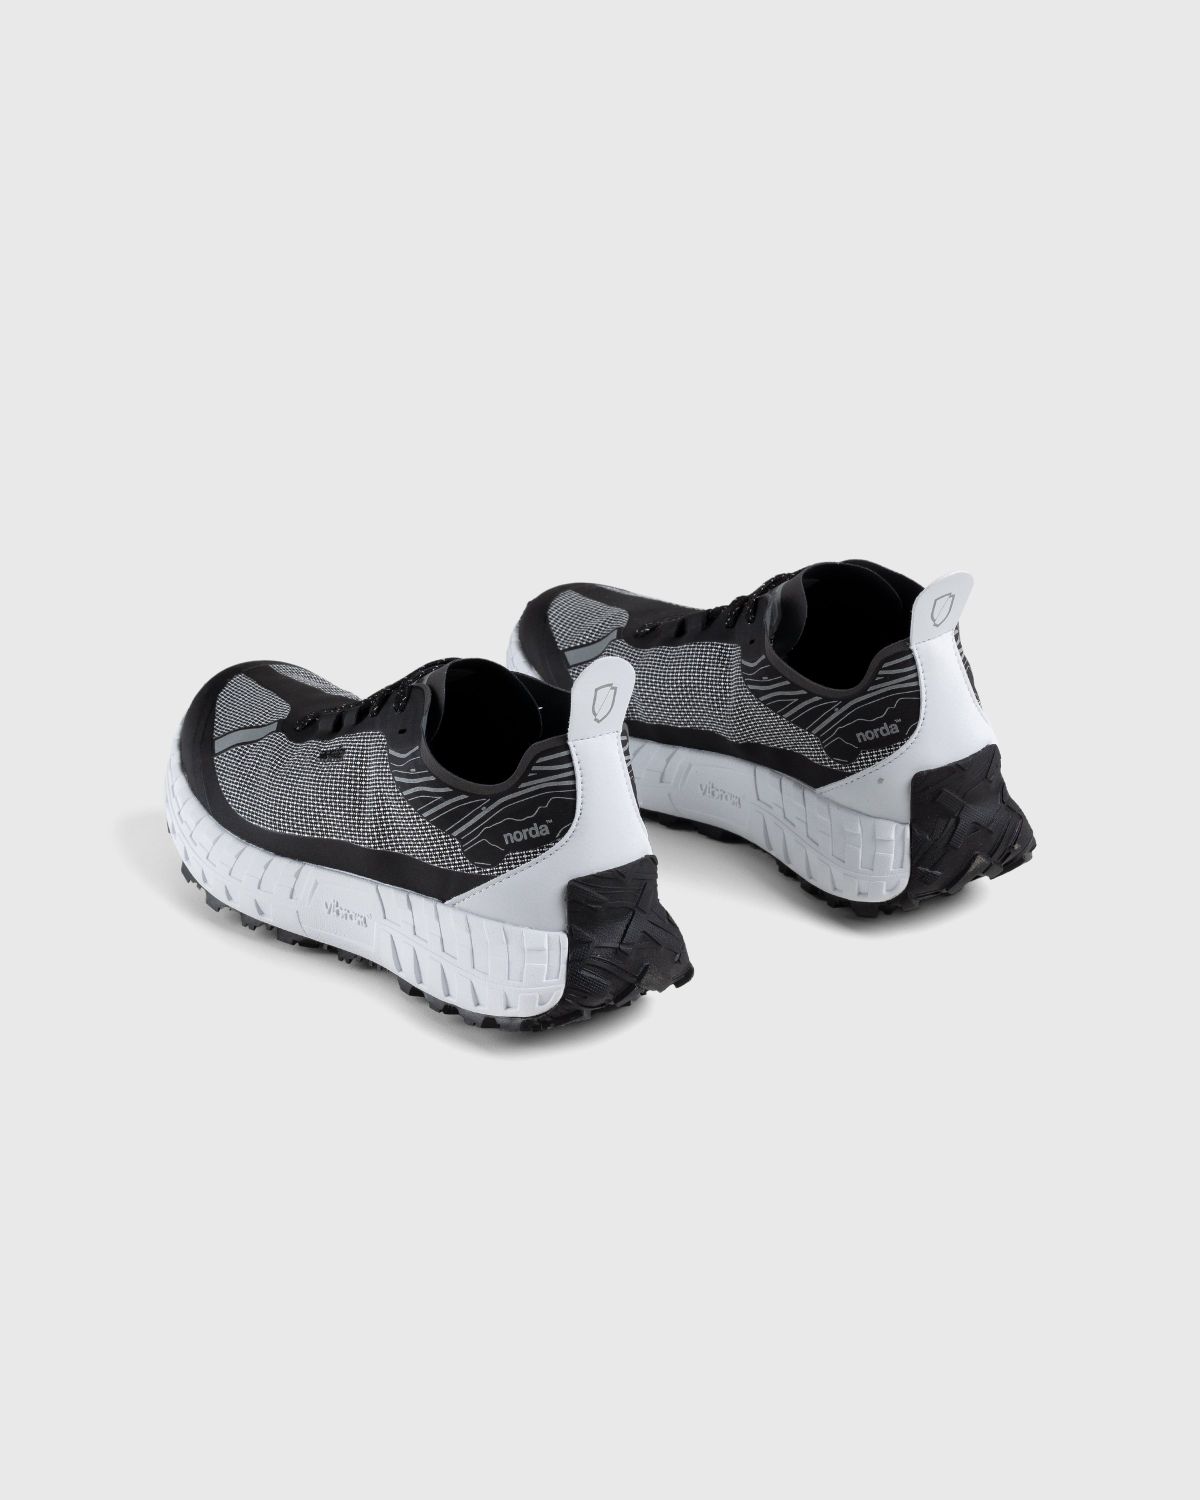 Norda – 001 M Black - Sneakers - Black - Image 3